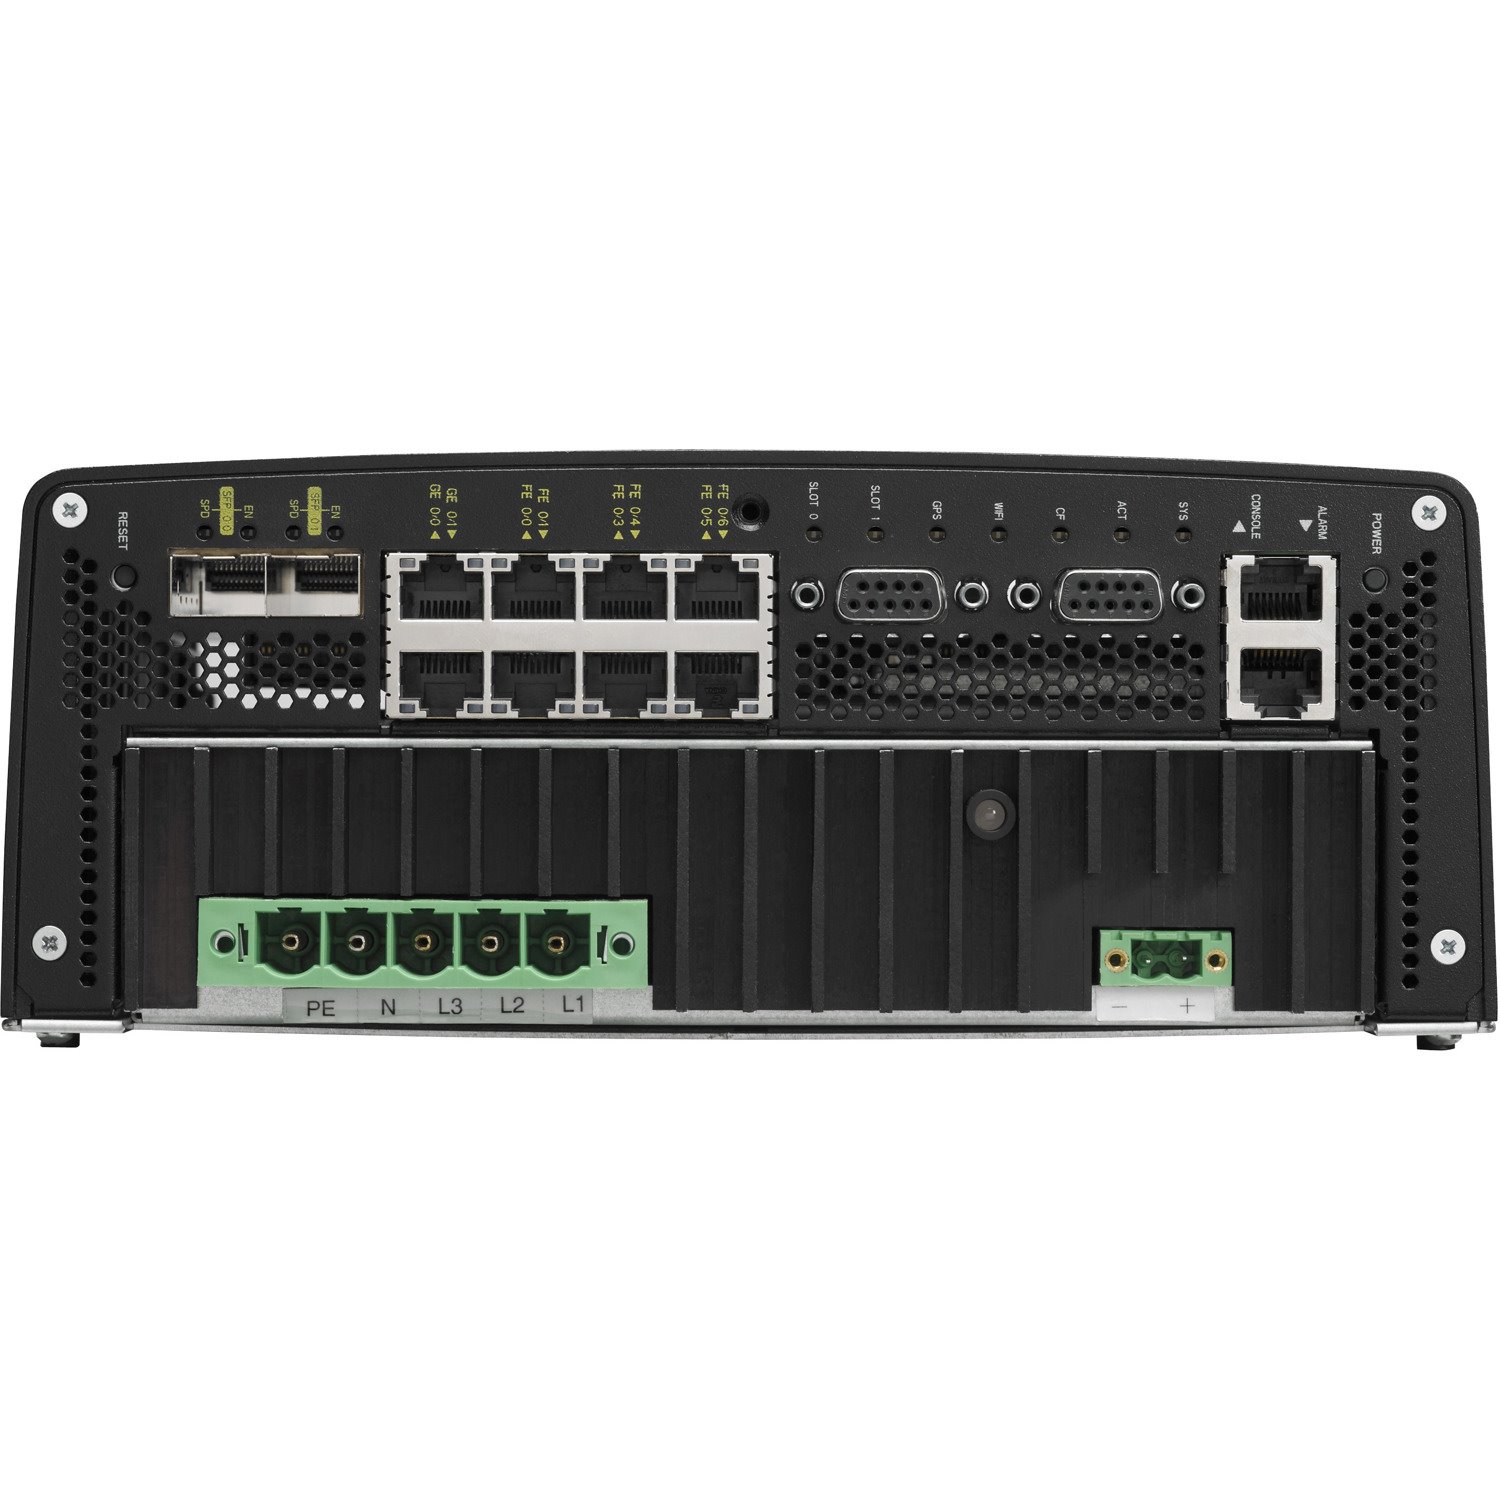 Cisco 1000 CGR 1120 Router